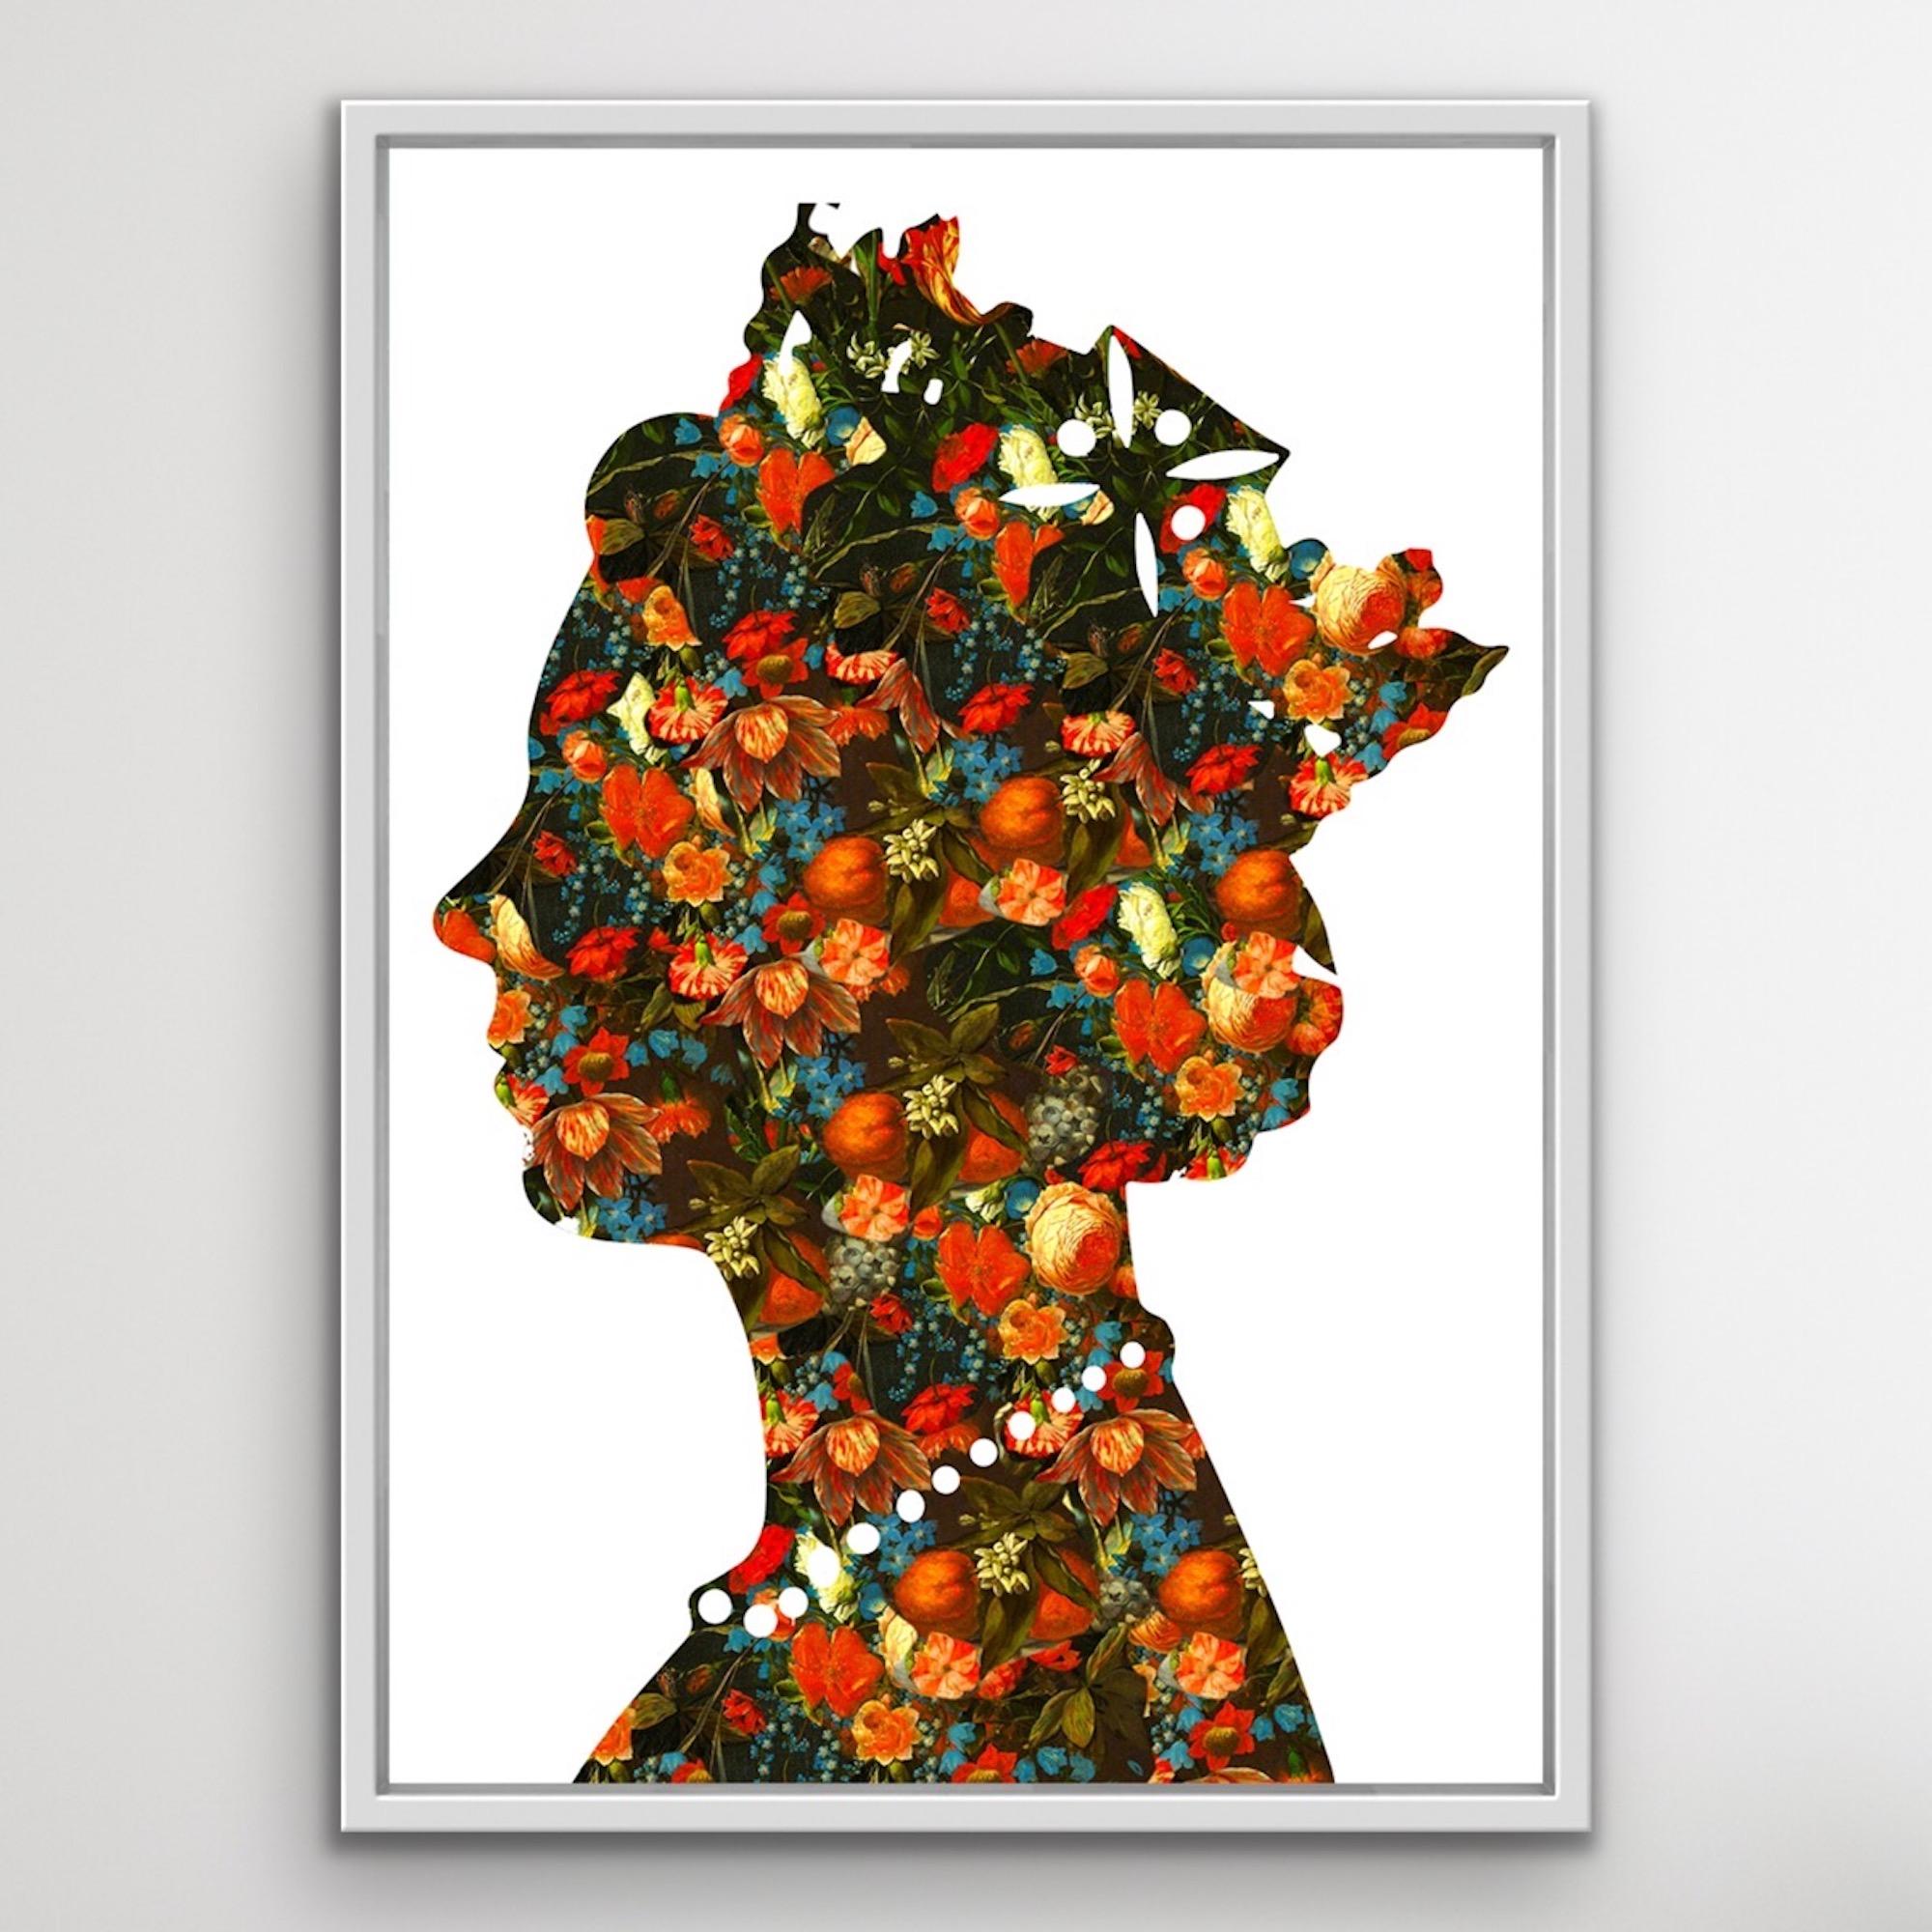 One Queen (07), Floral Artwork, Famous Celebrity Portrait, Original Digital Art - Baroque Painting by Agent X